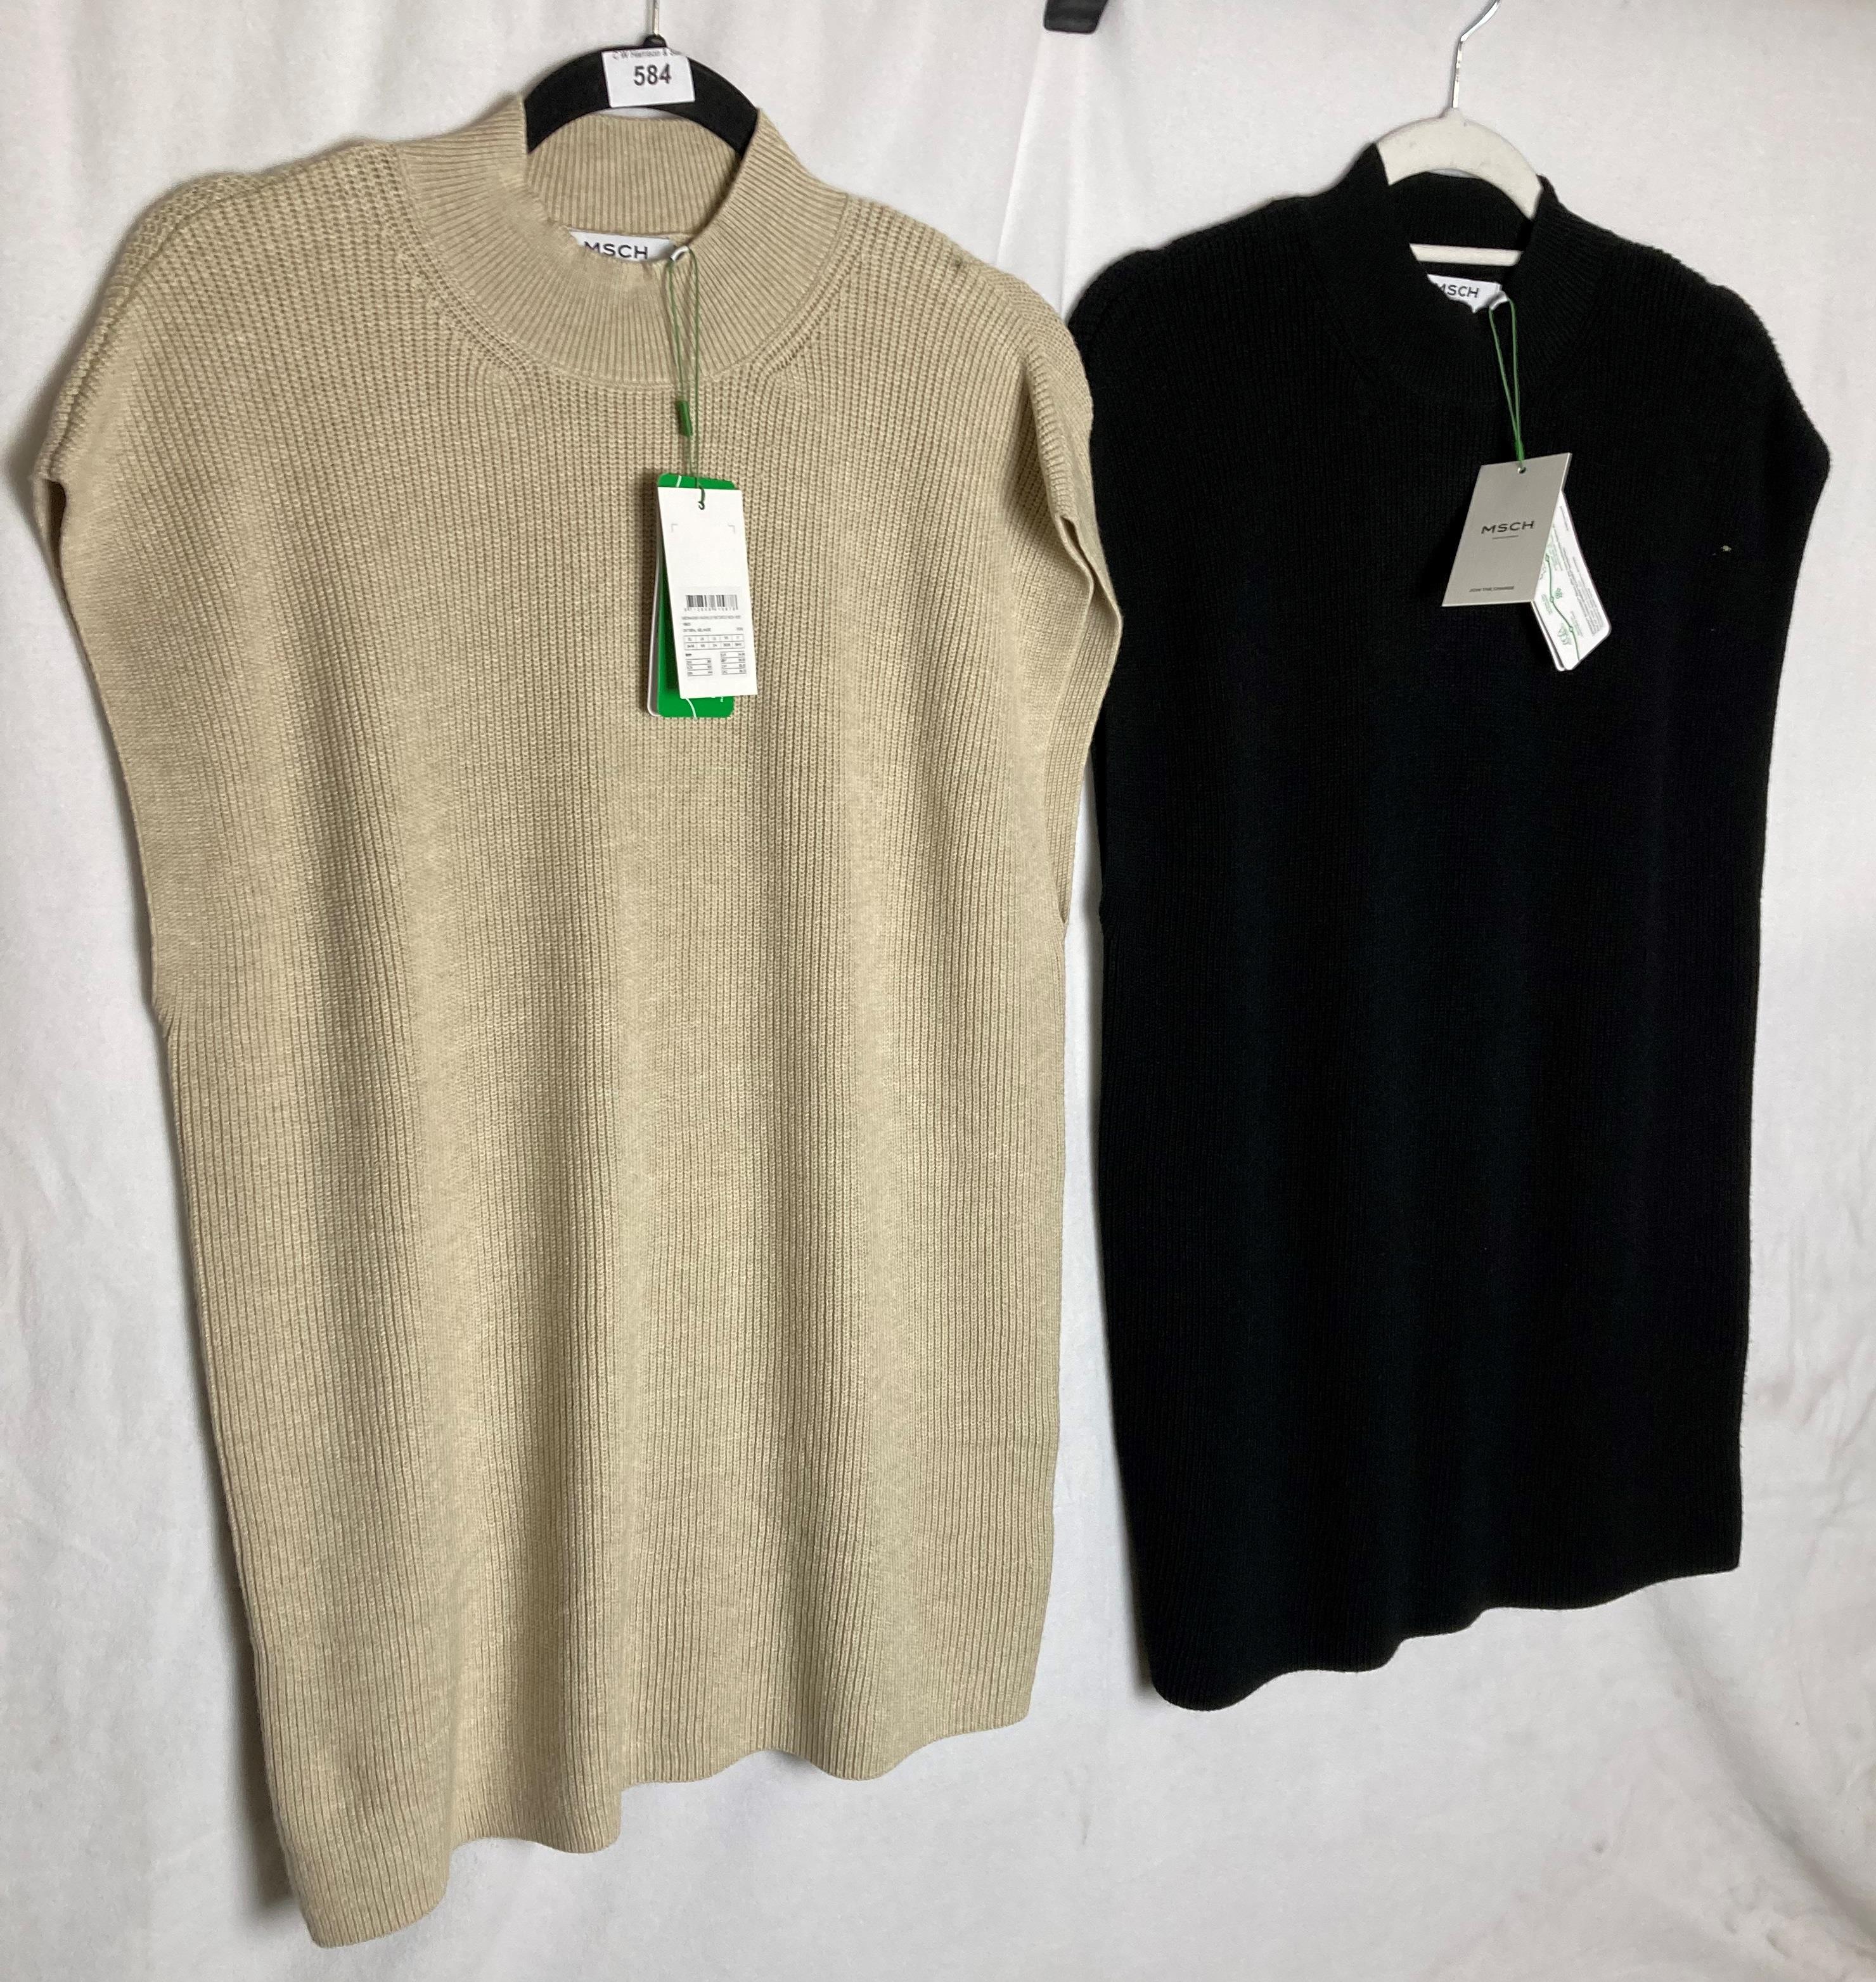 2 X assorted MSCH ladies sleeveless overtops in beige and black both size XS/S UK 6/8 - RRP: £59.